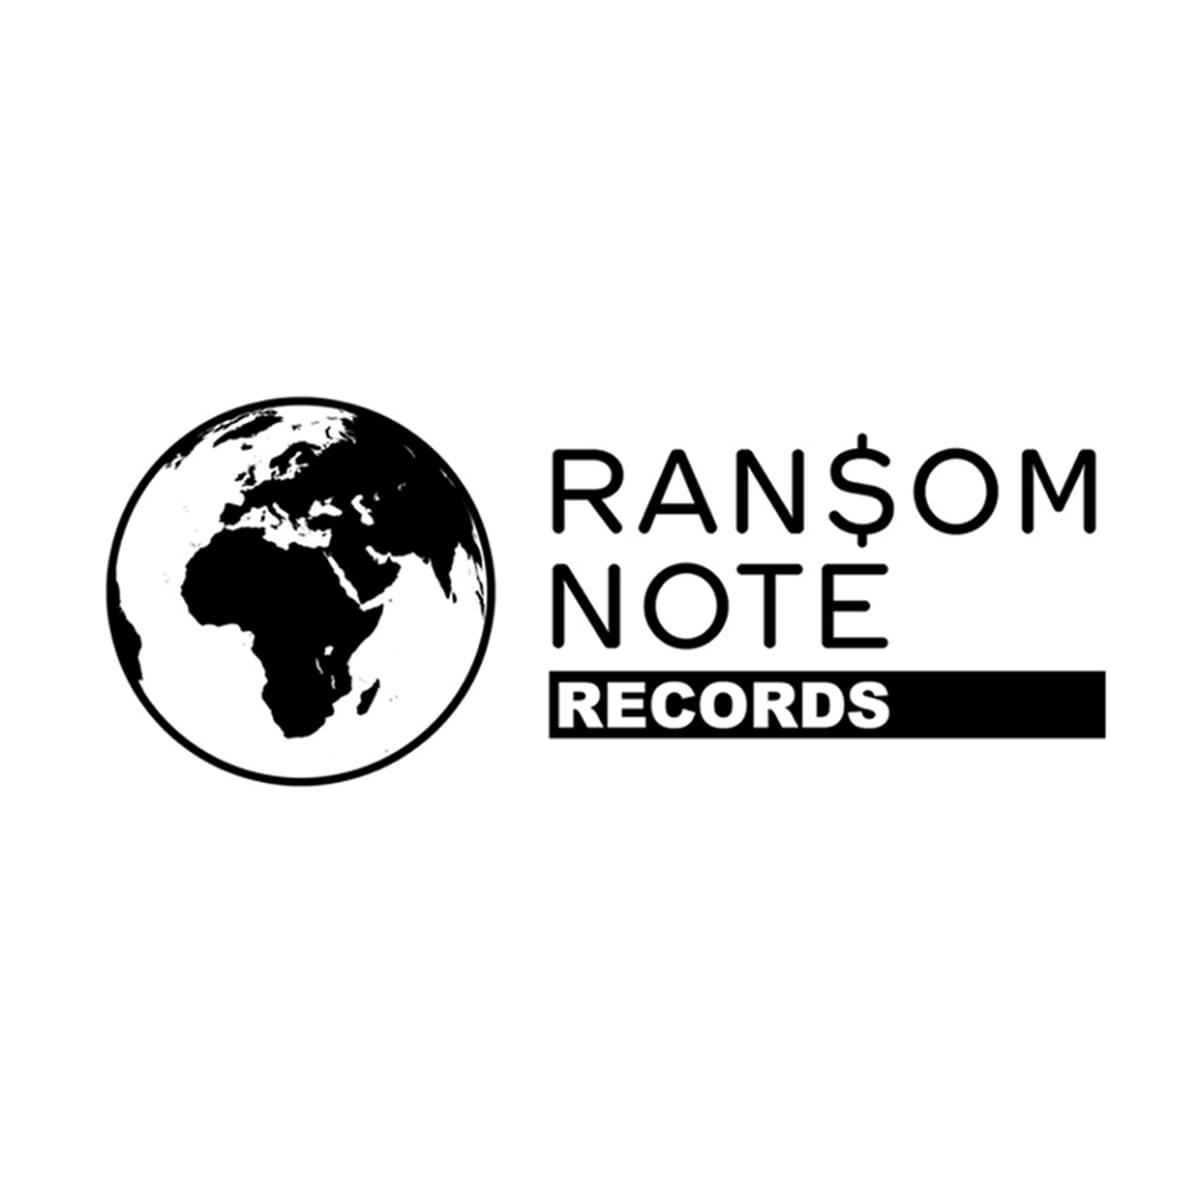 Ransom note records logo